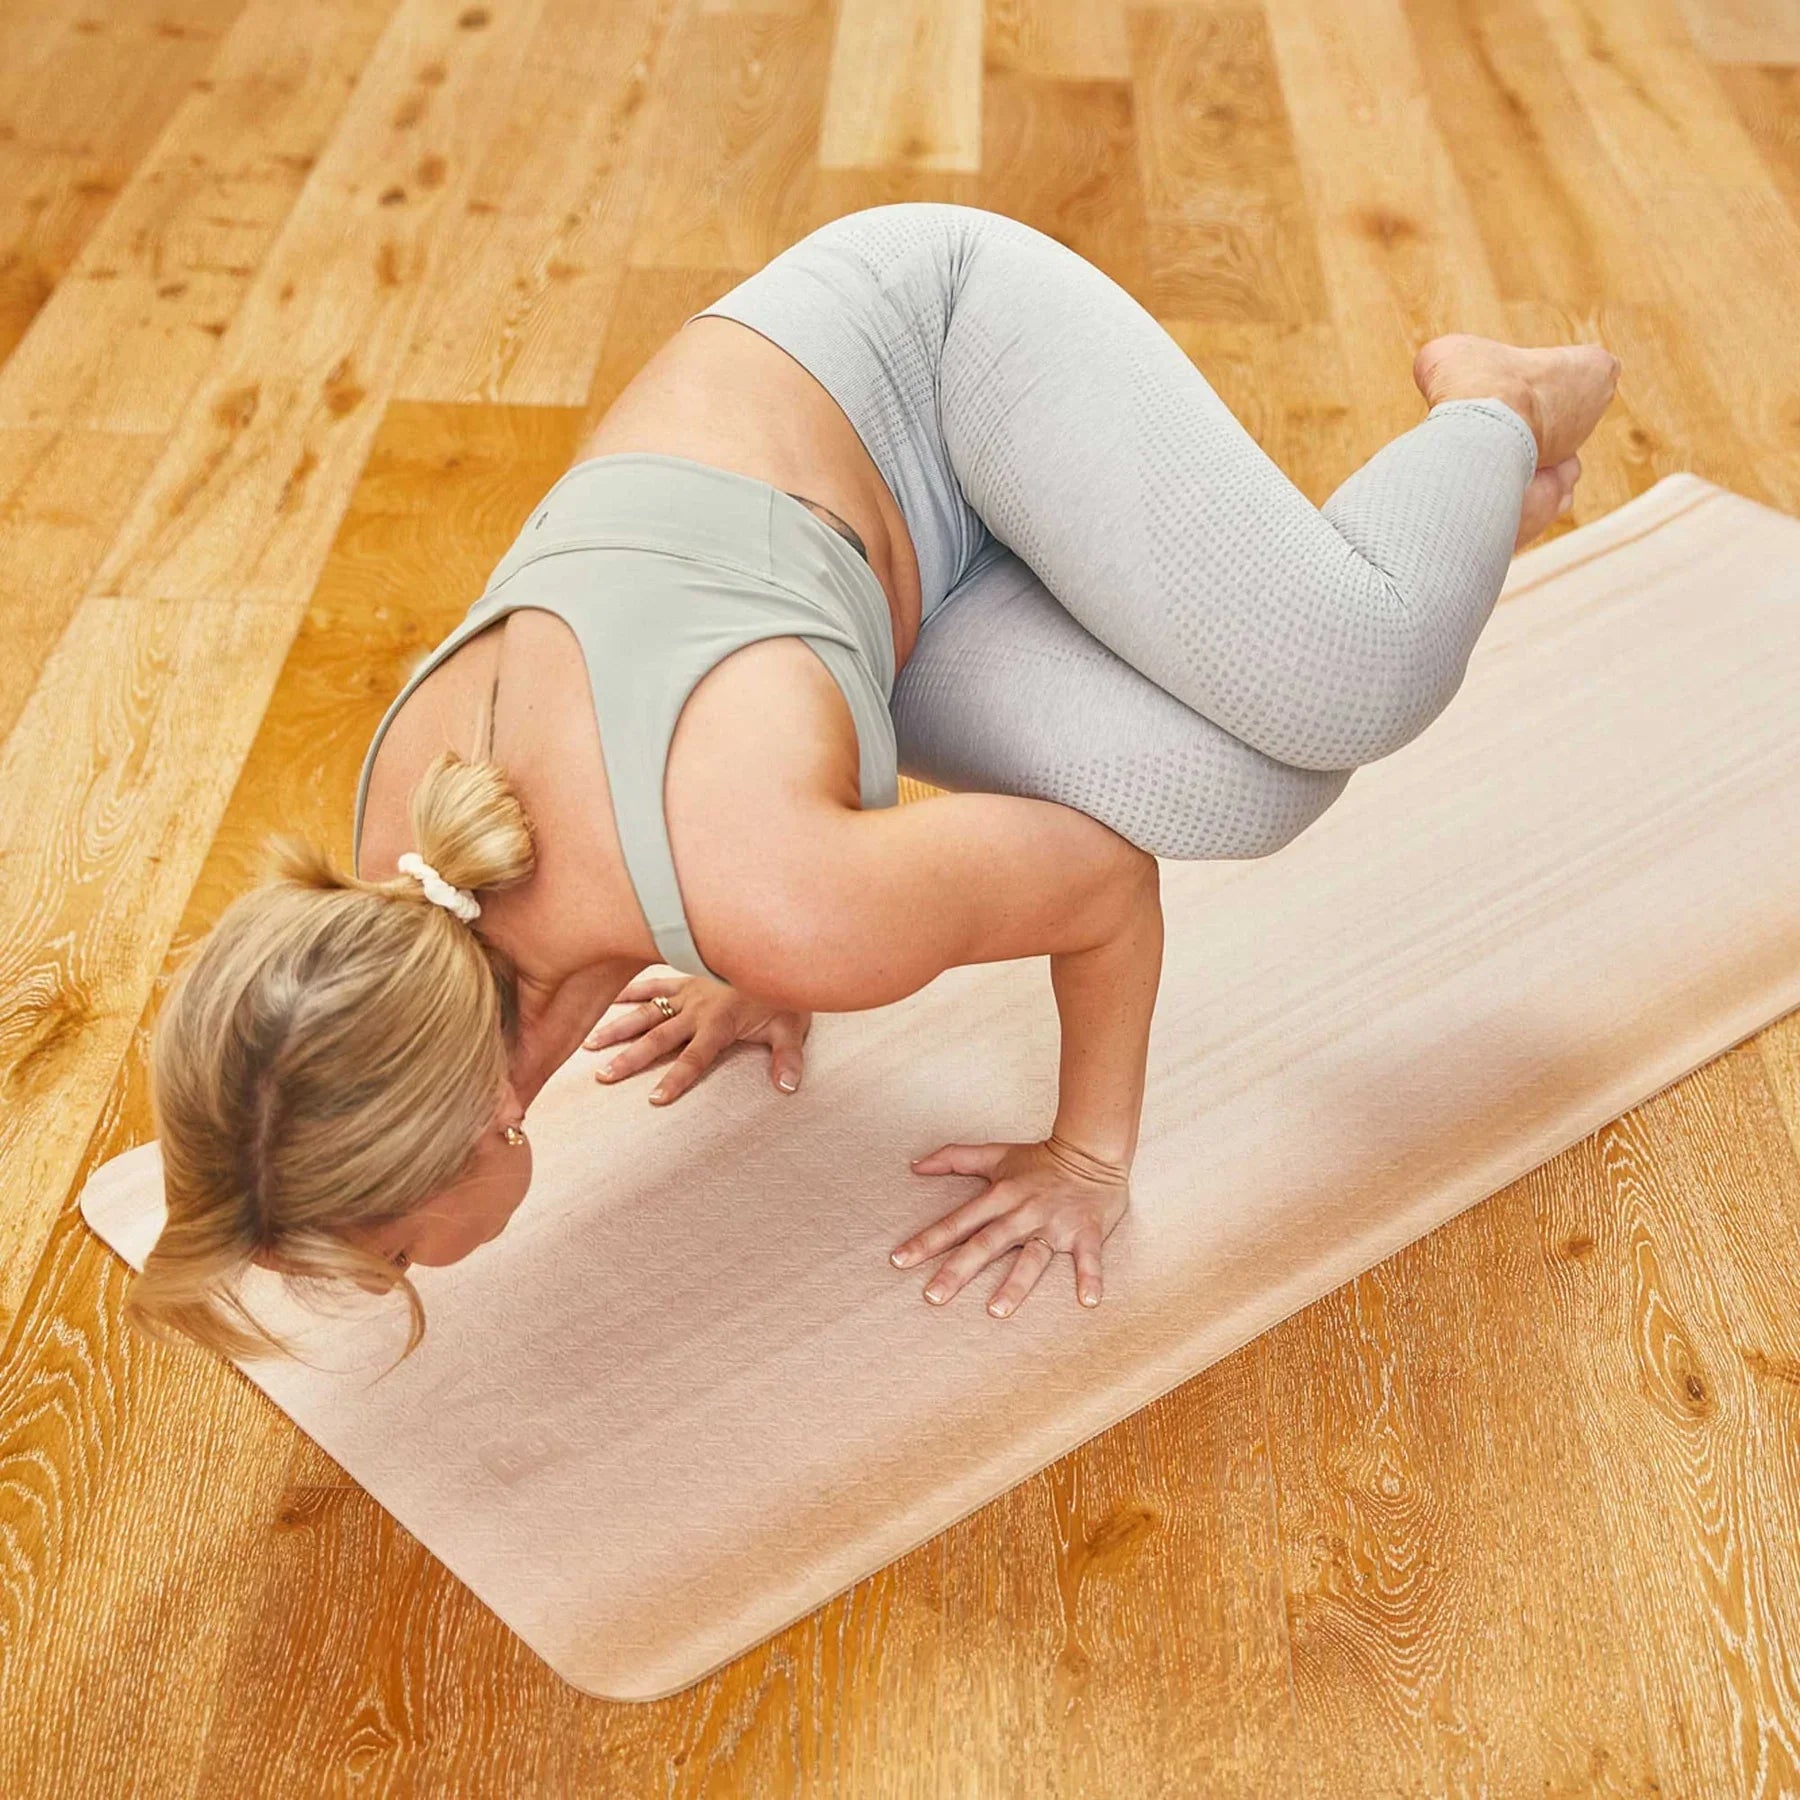 Reversible yoga mat BAHE Soft Touch Xl 6Mm - Carpets - Yoga